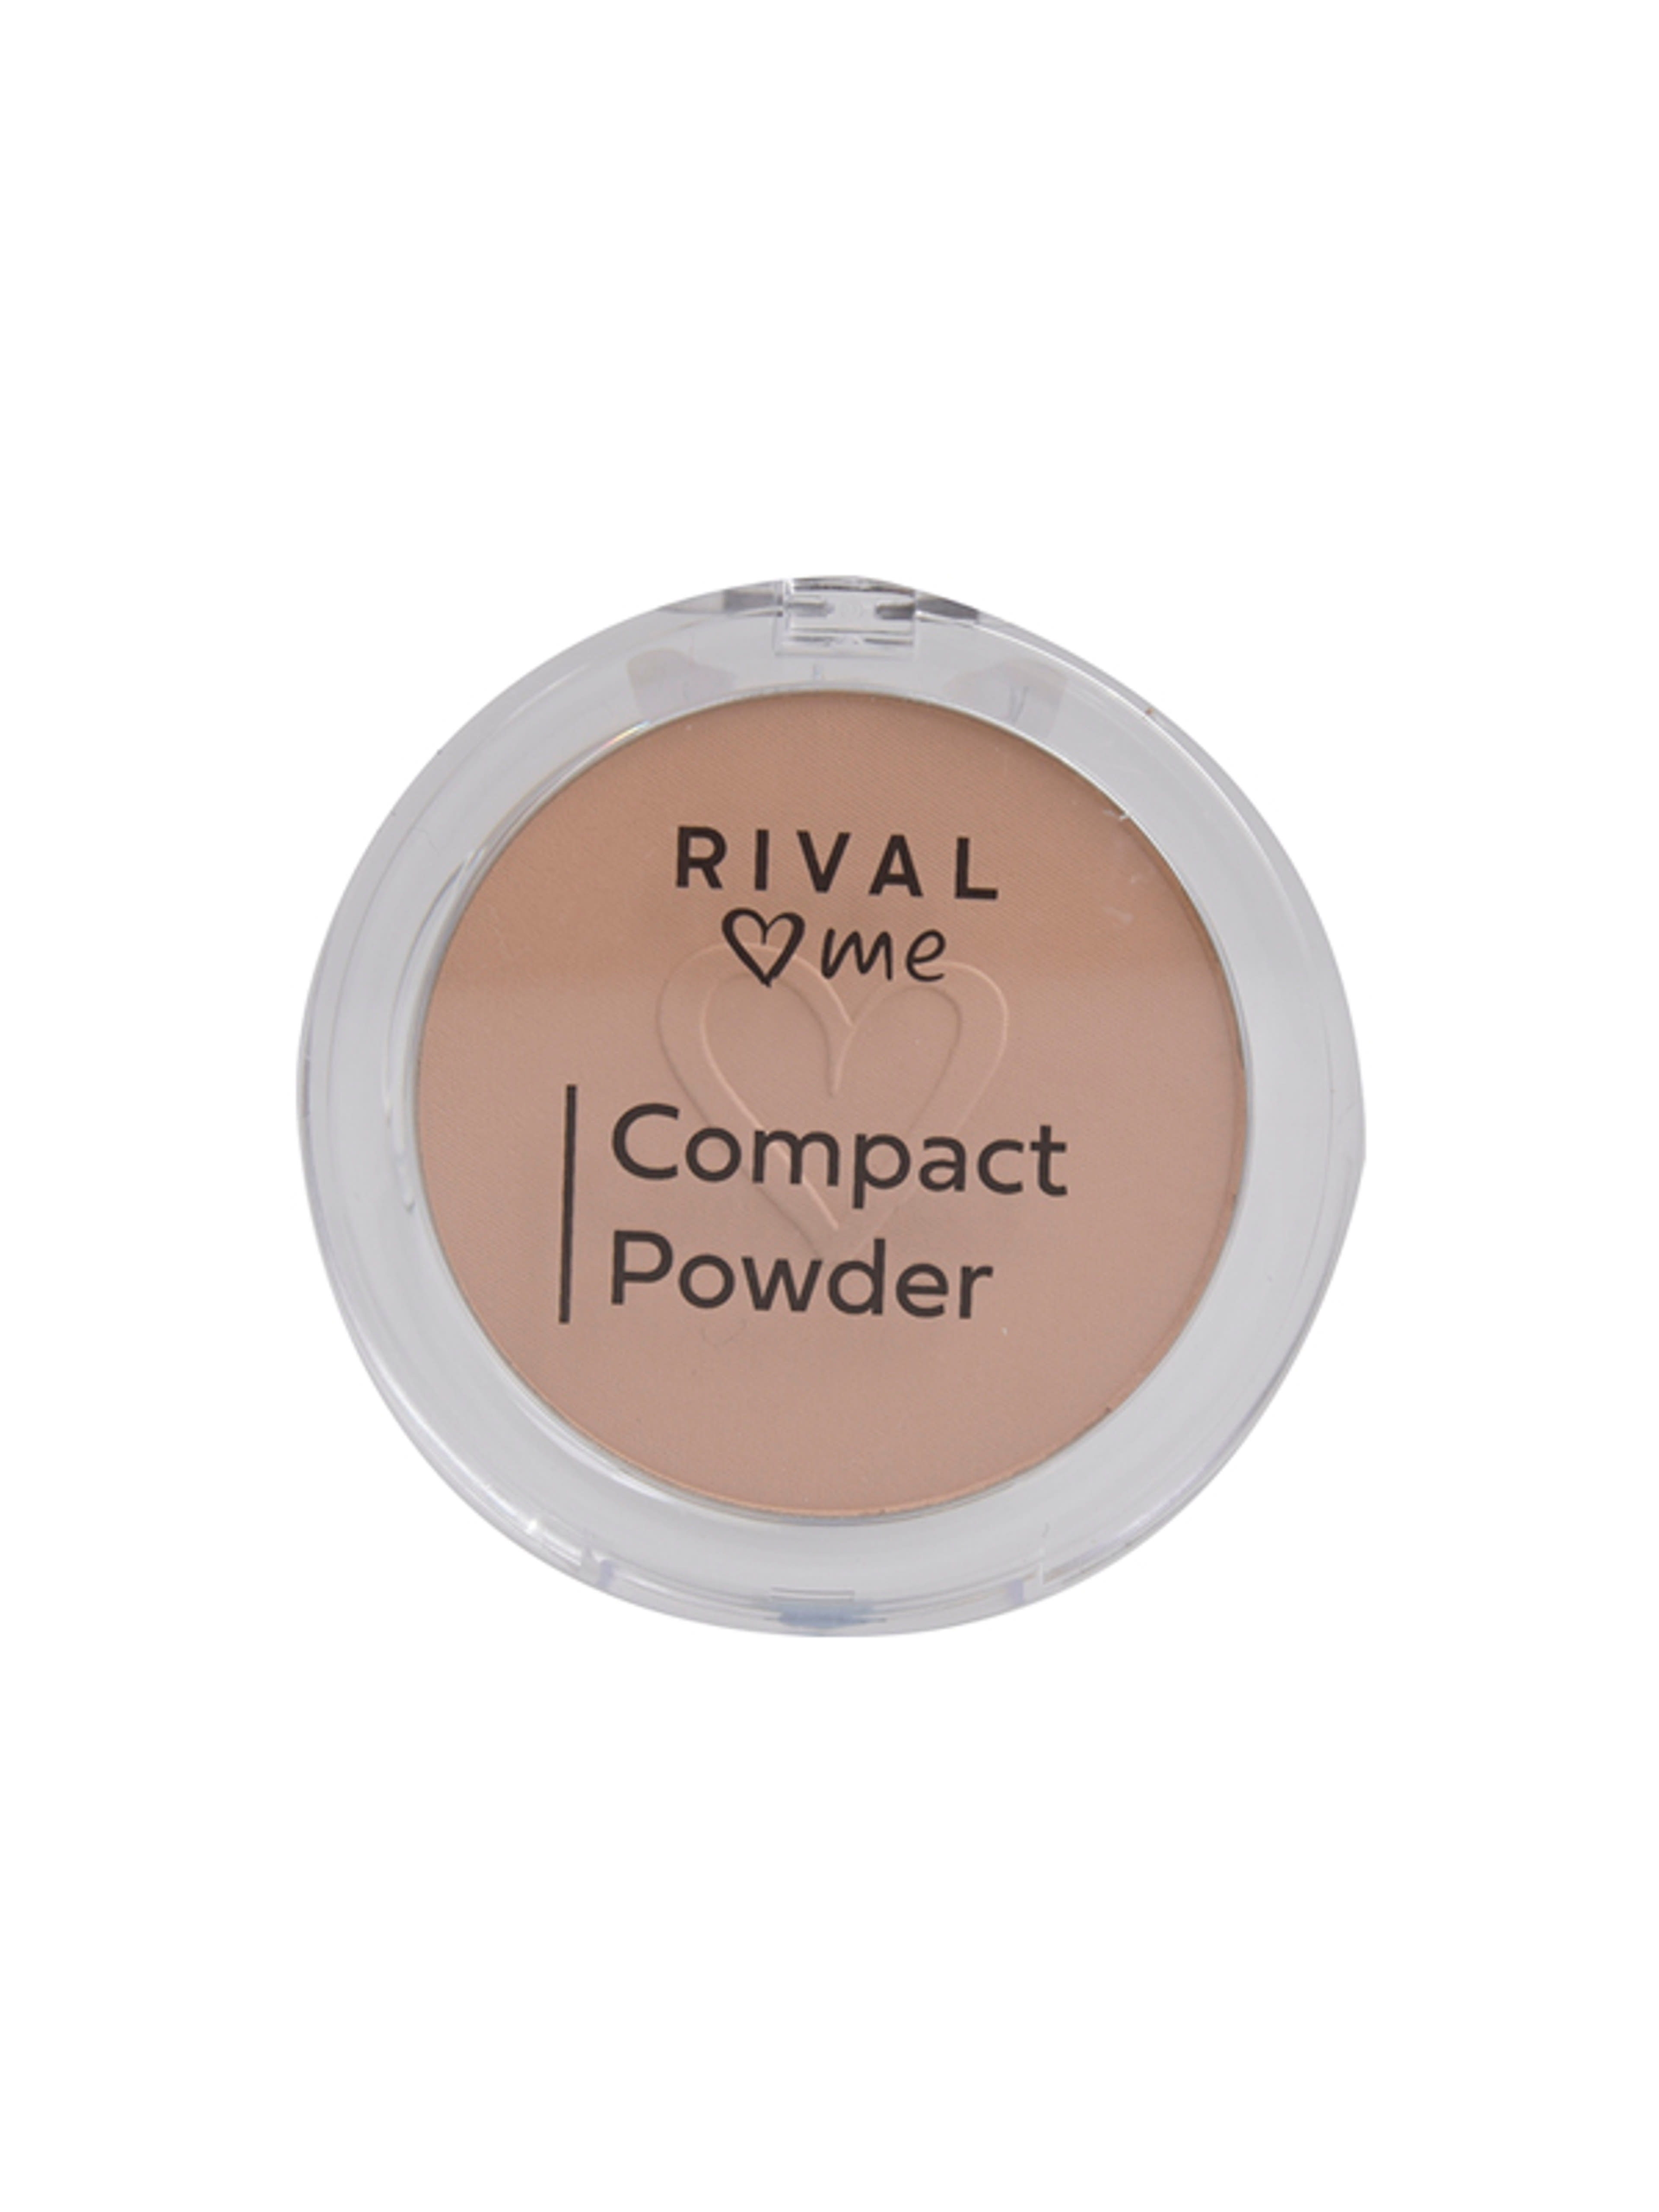 Rival Loves Me púder compact 04 sand - 1 db-1